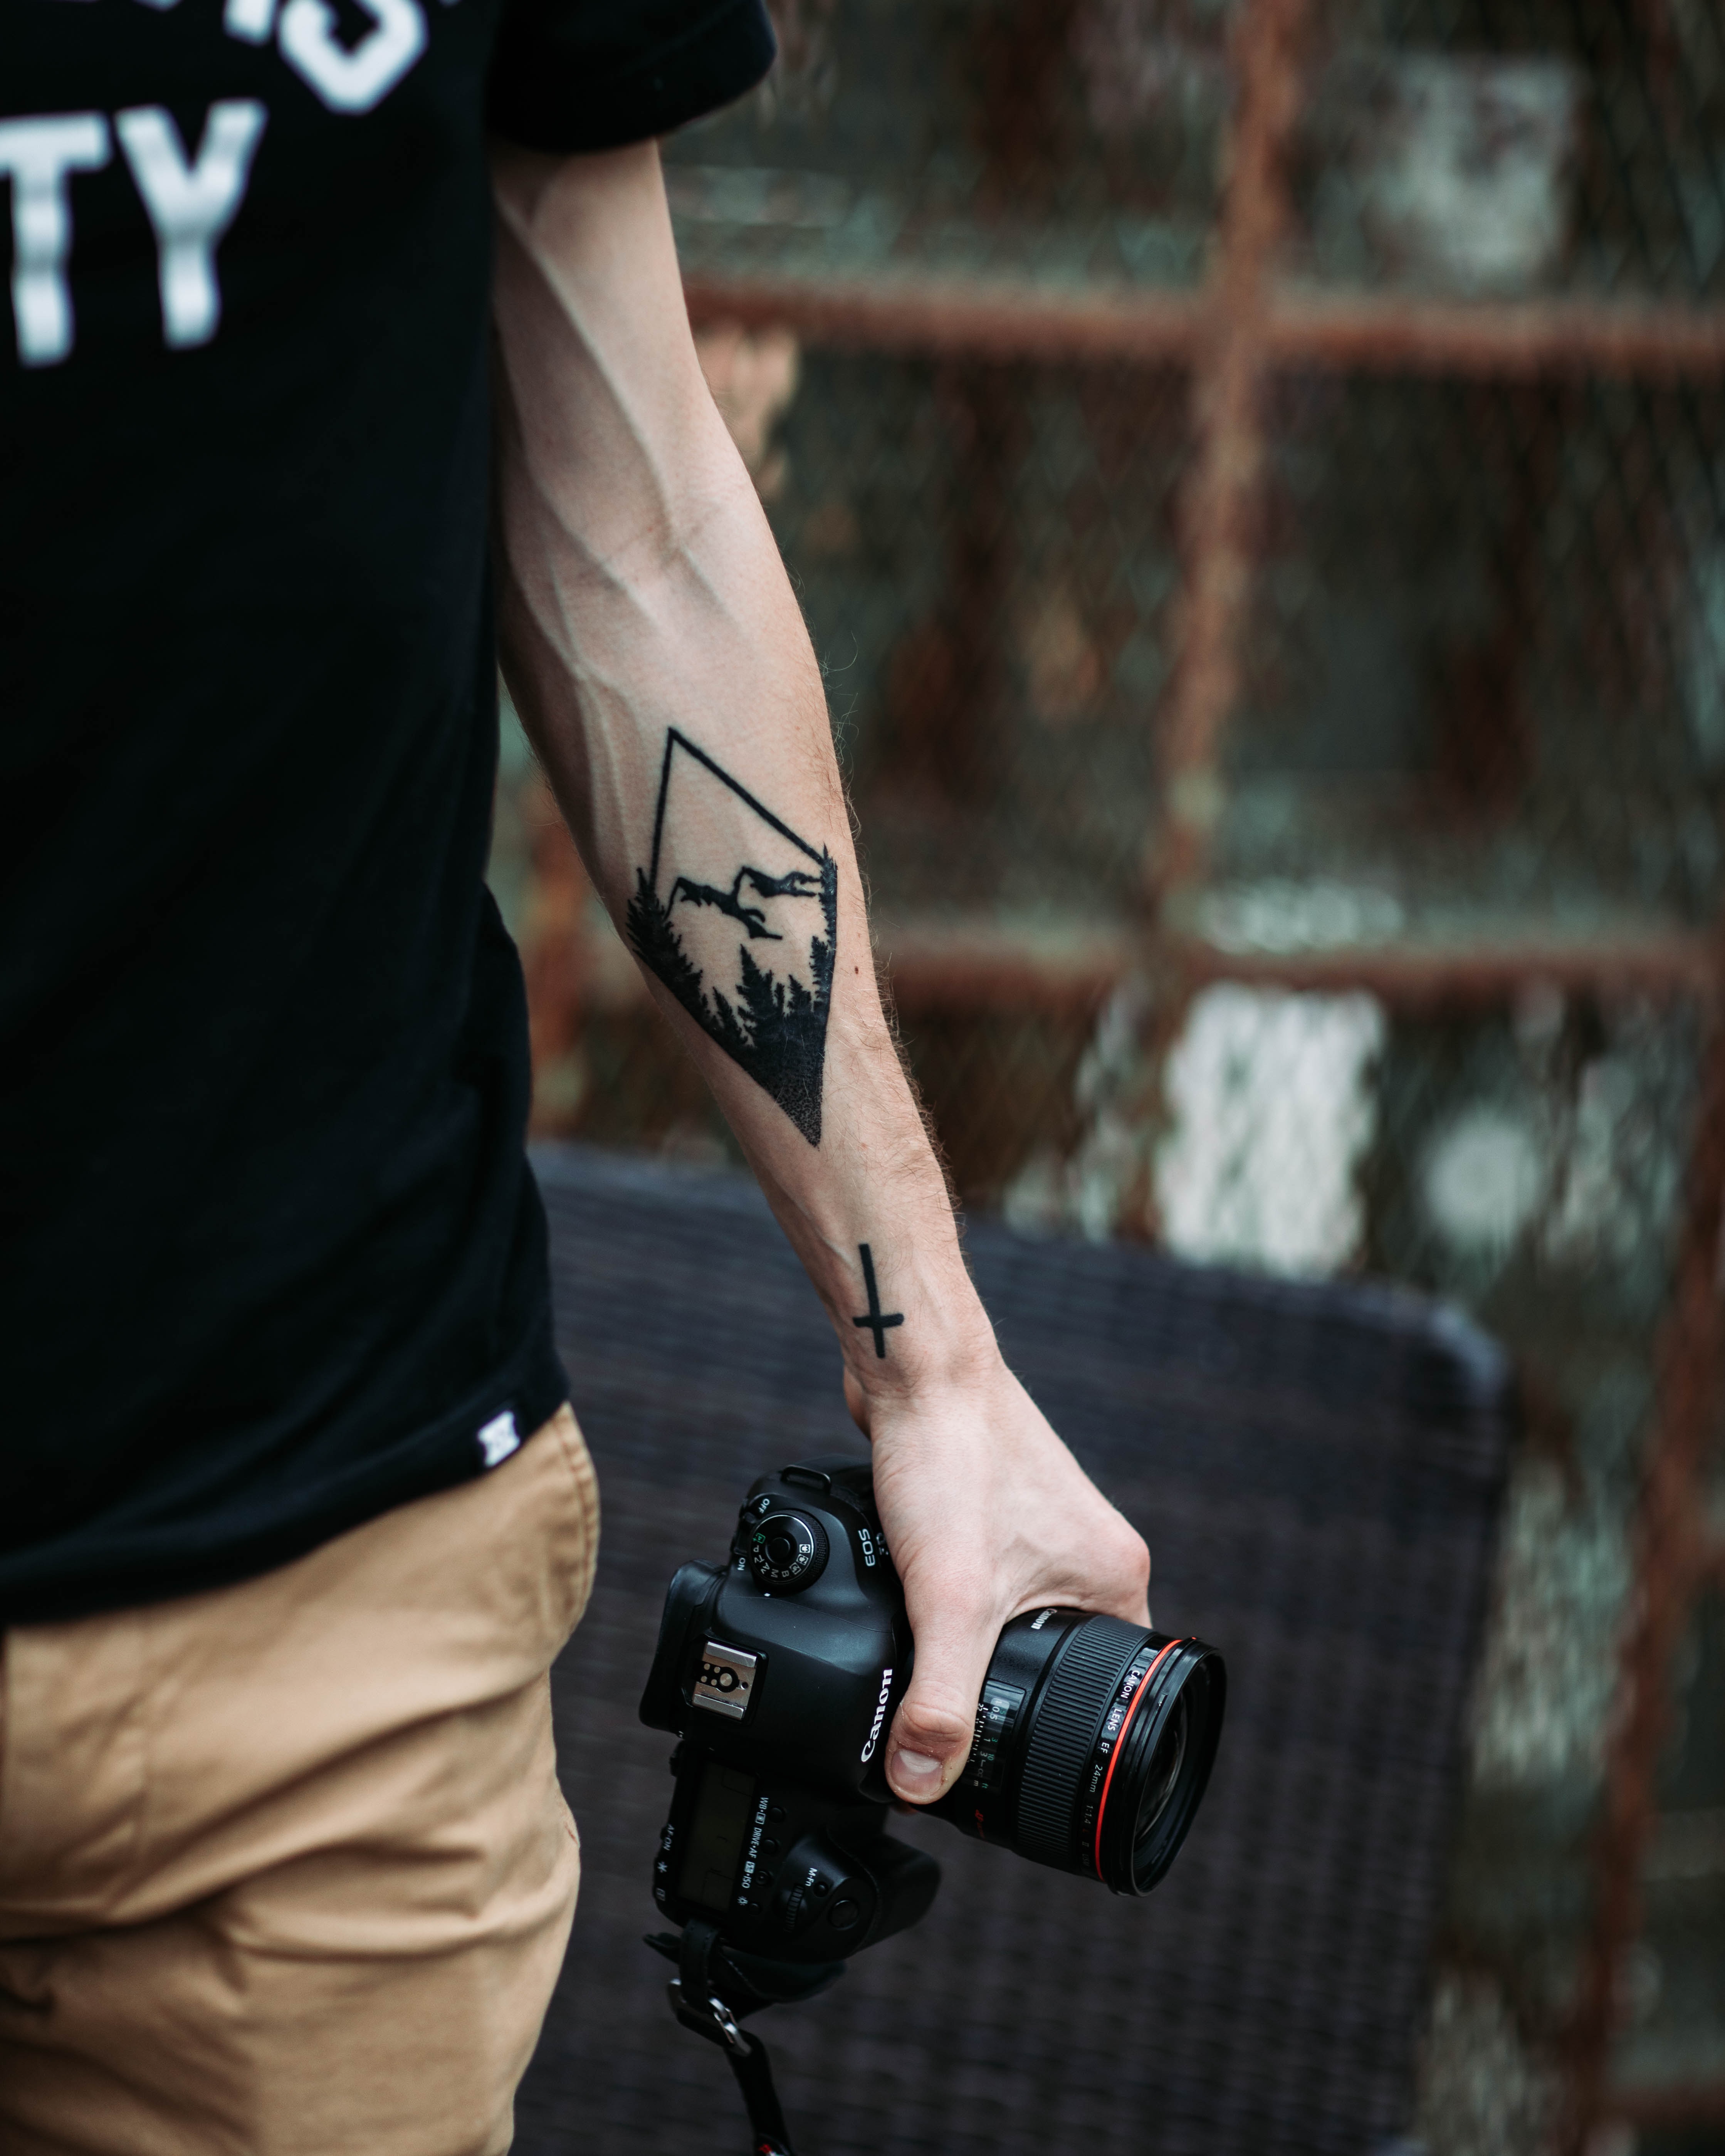 photographer, technologies, tattoo, tattoos, hand, technology, camera 2160p